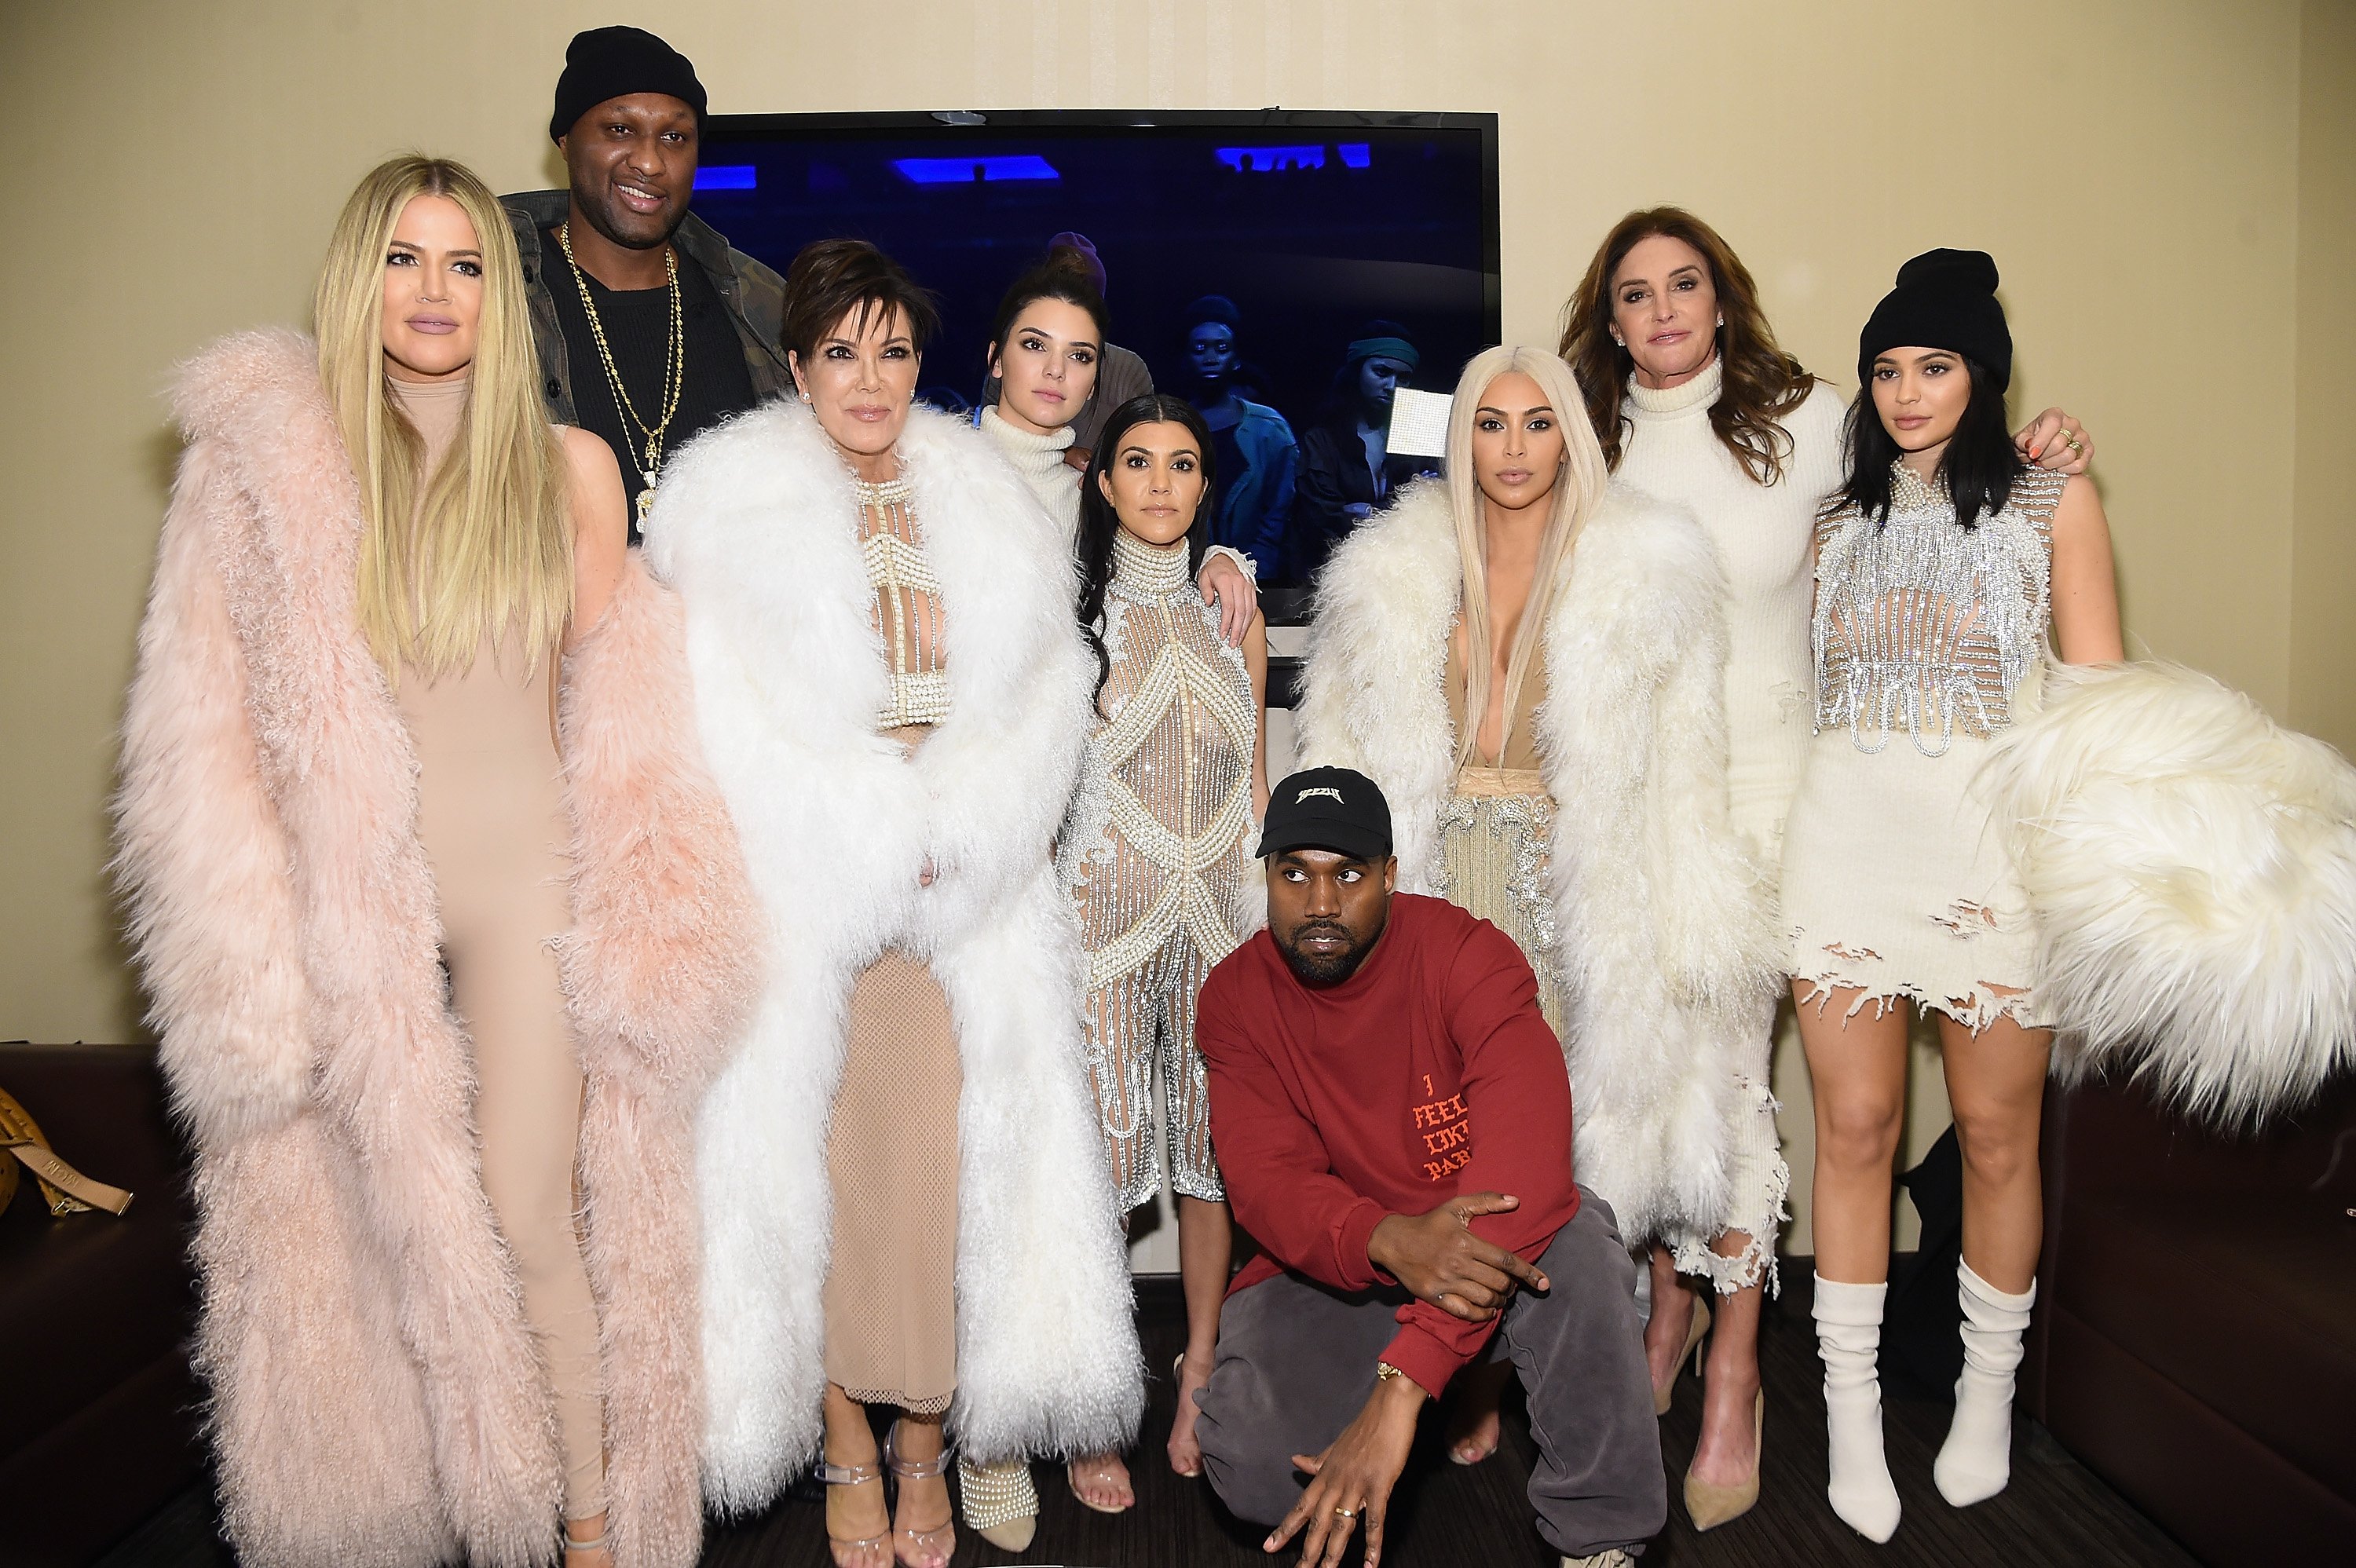 Khloe Kardashian, Lamar Odom, Kris Jenner, Kendall Jenner, Kourtney Kardashian, Kanye West, Kim Kardashian, Caitlyn Jenner and Kylie Jenner at Fashion Week